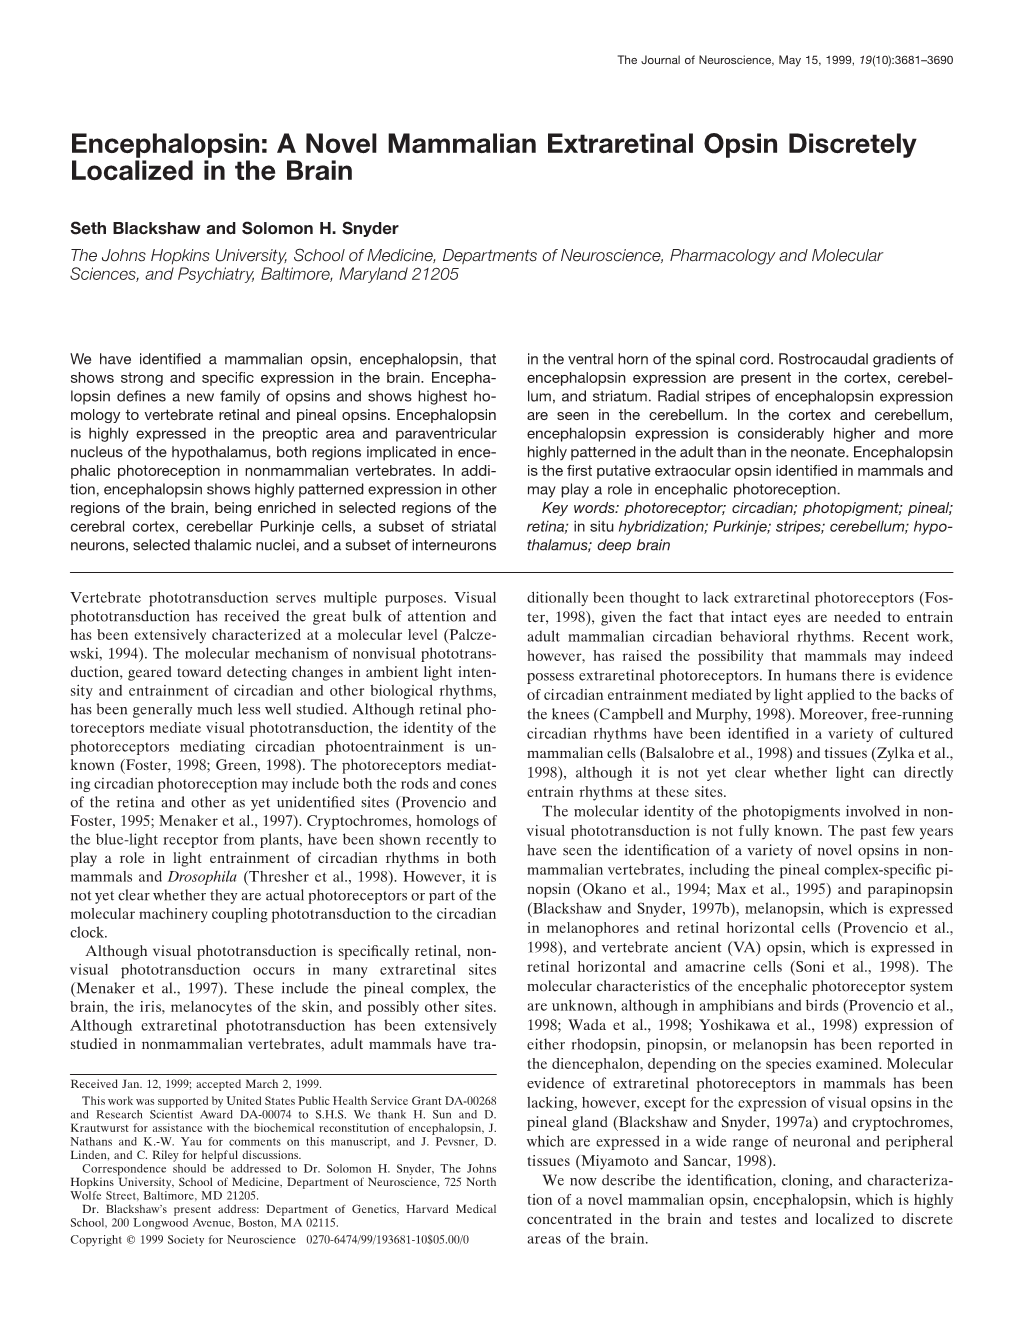 Encephalopsin: a Novel Mammalian Extraretinal Opsin Discretely Localized in the Brain